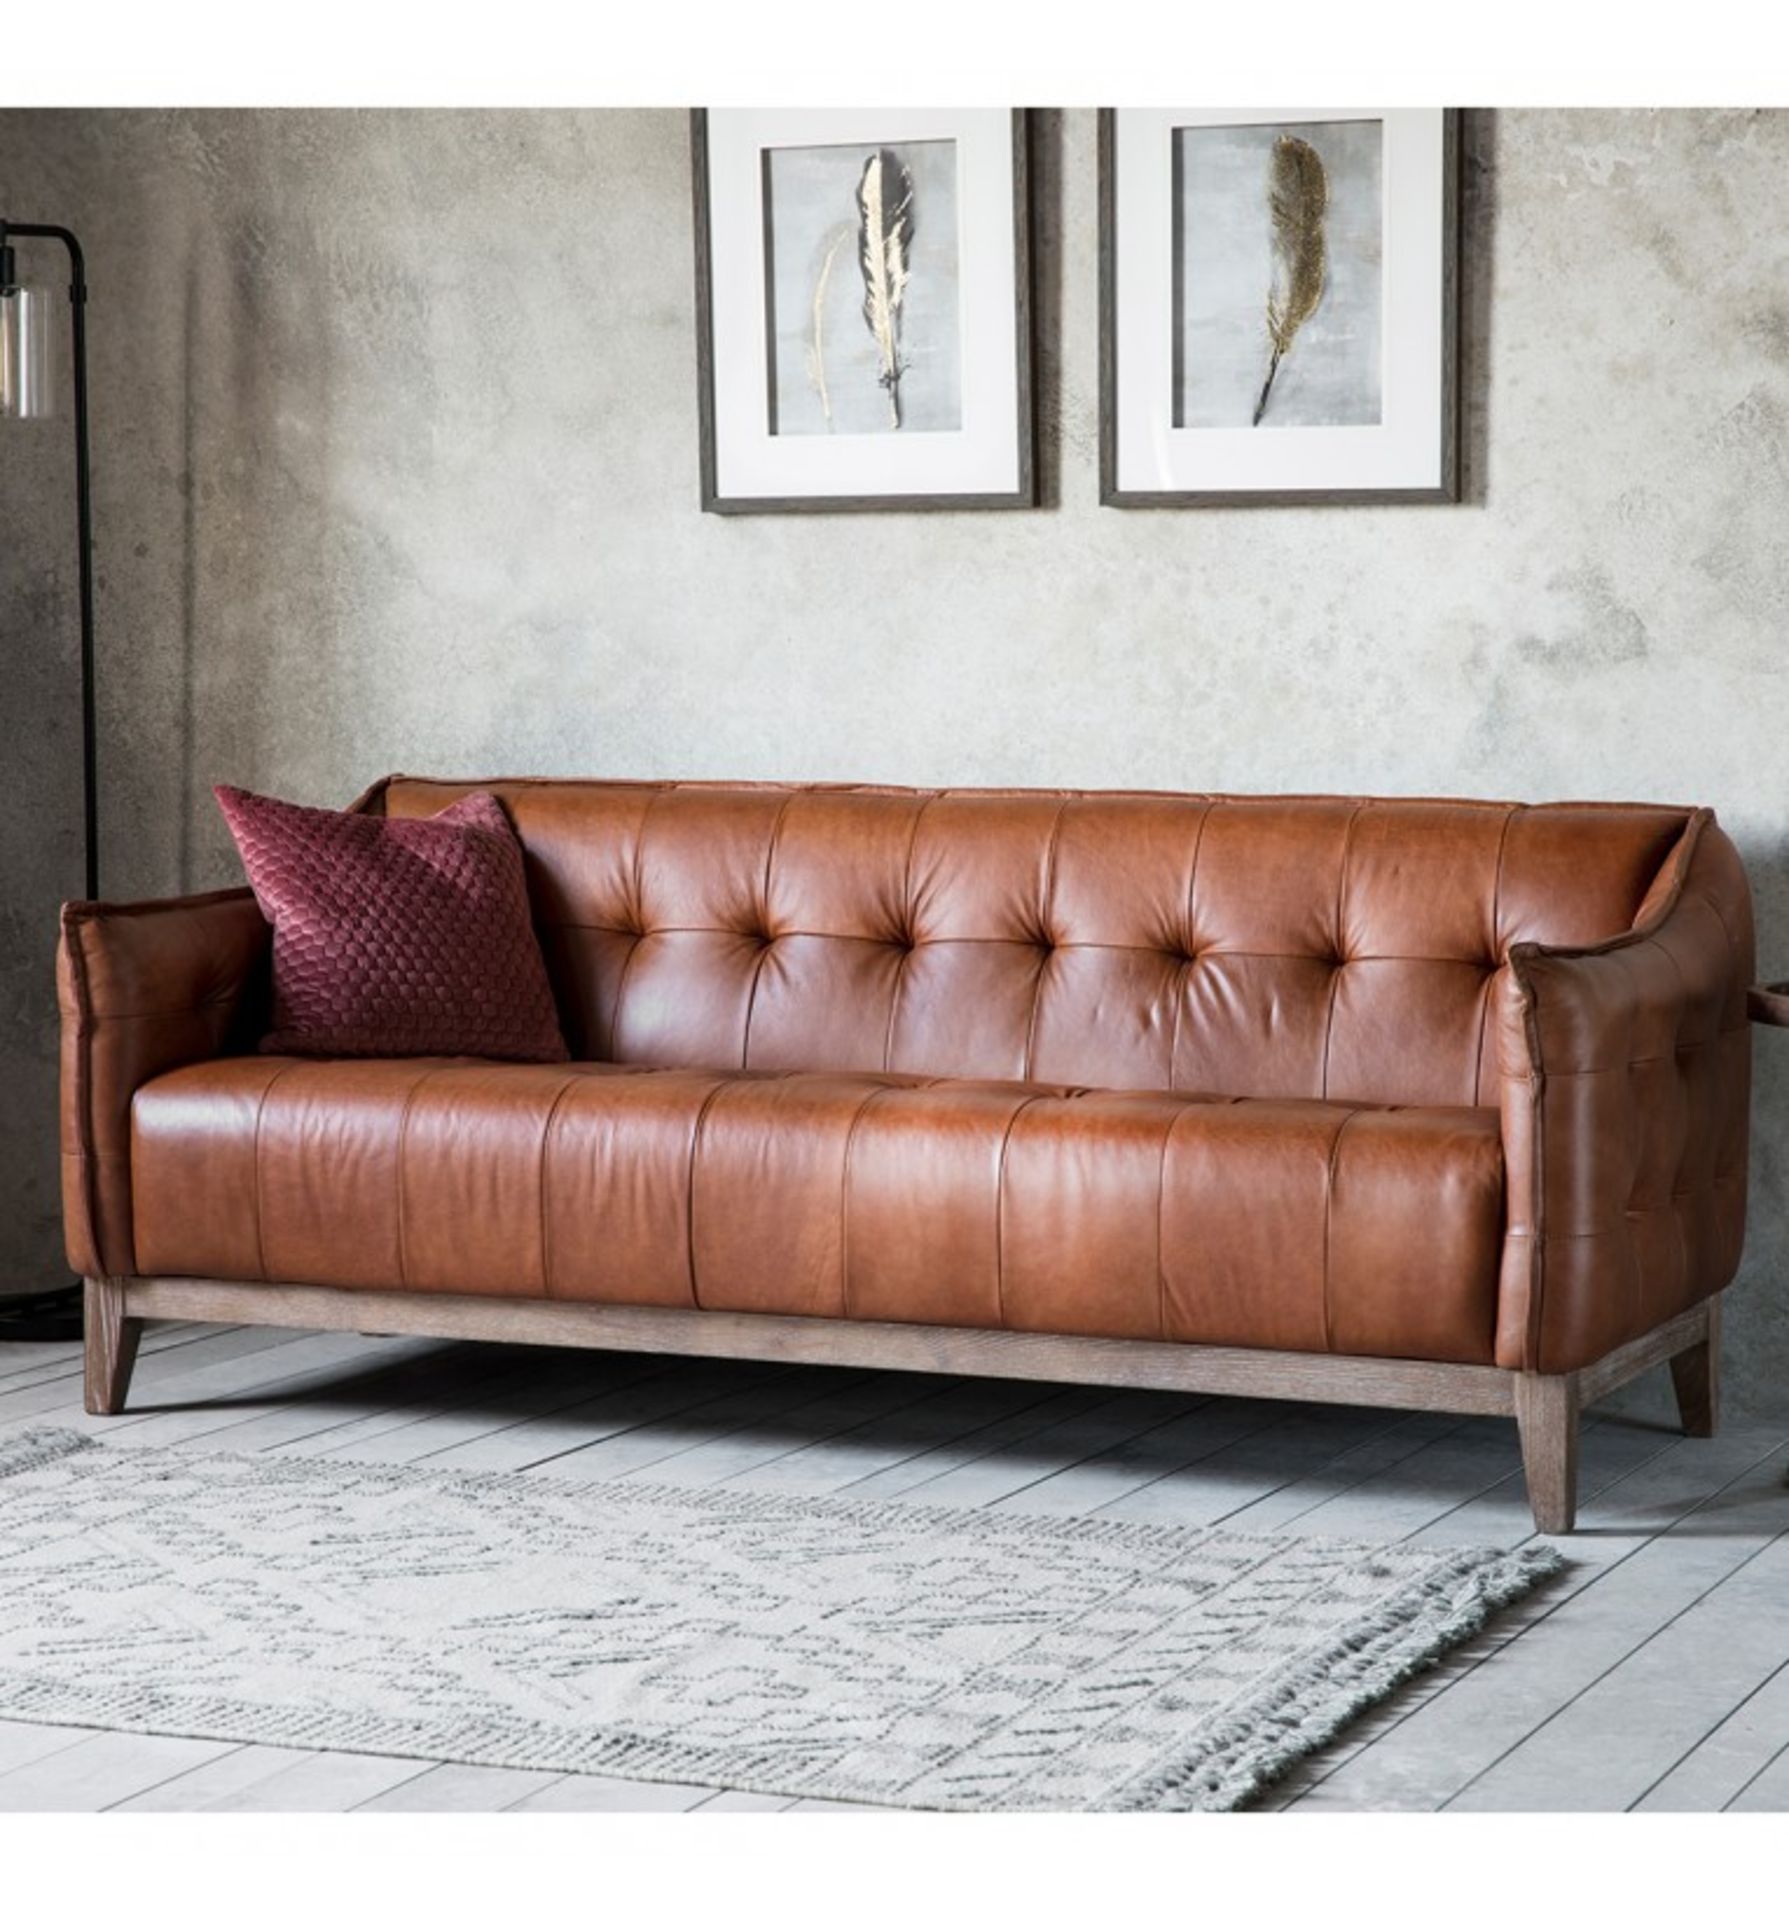 3 Seater Vintage Leather Sofa